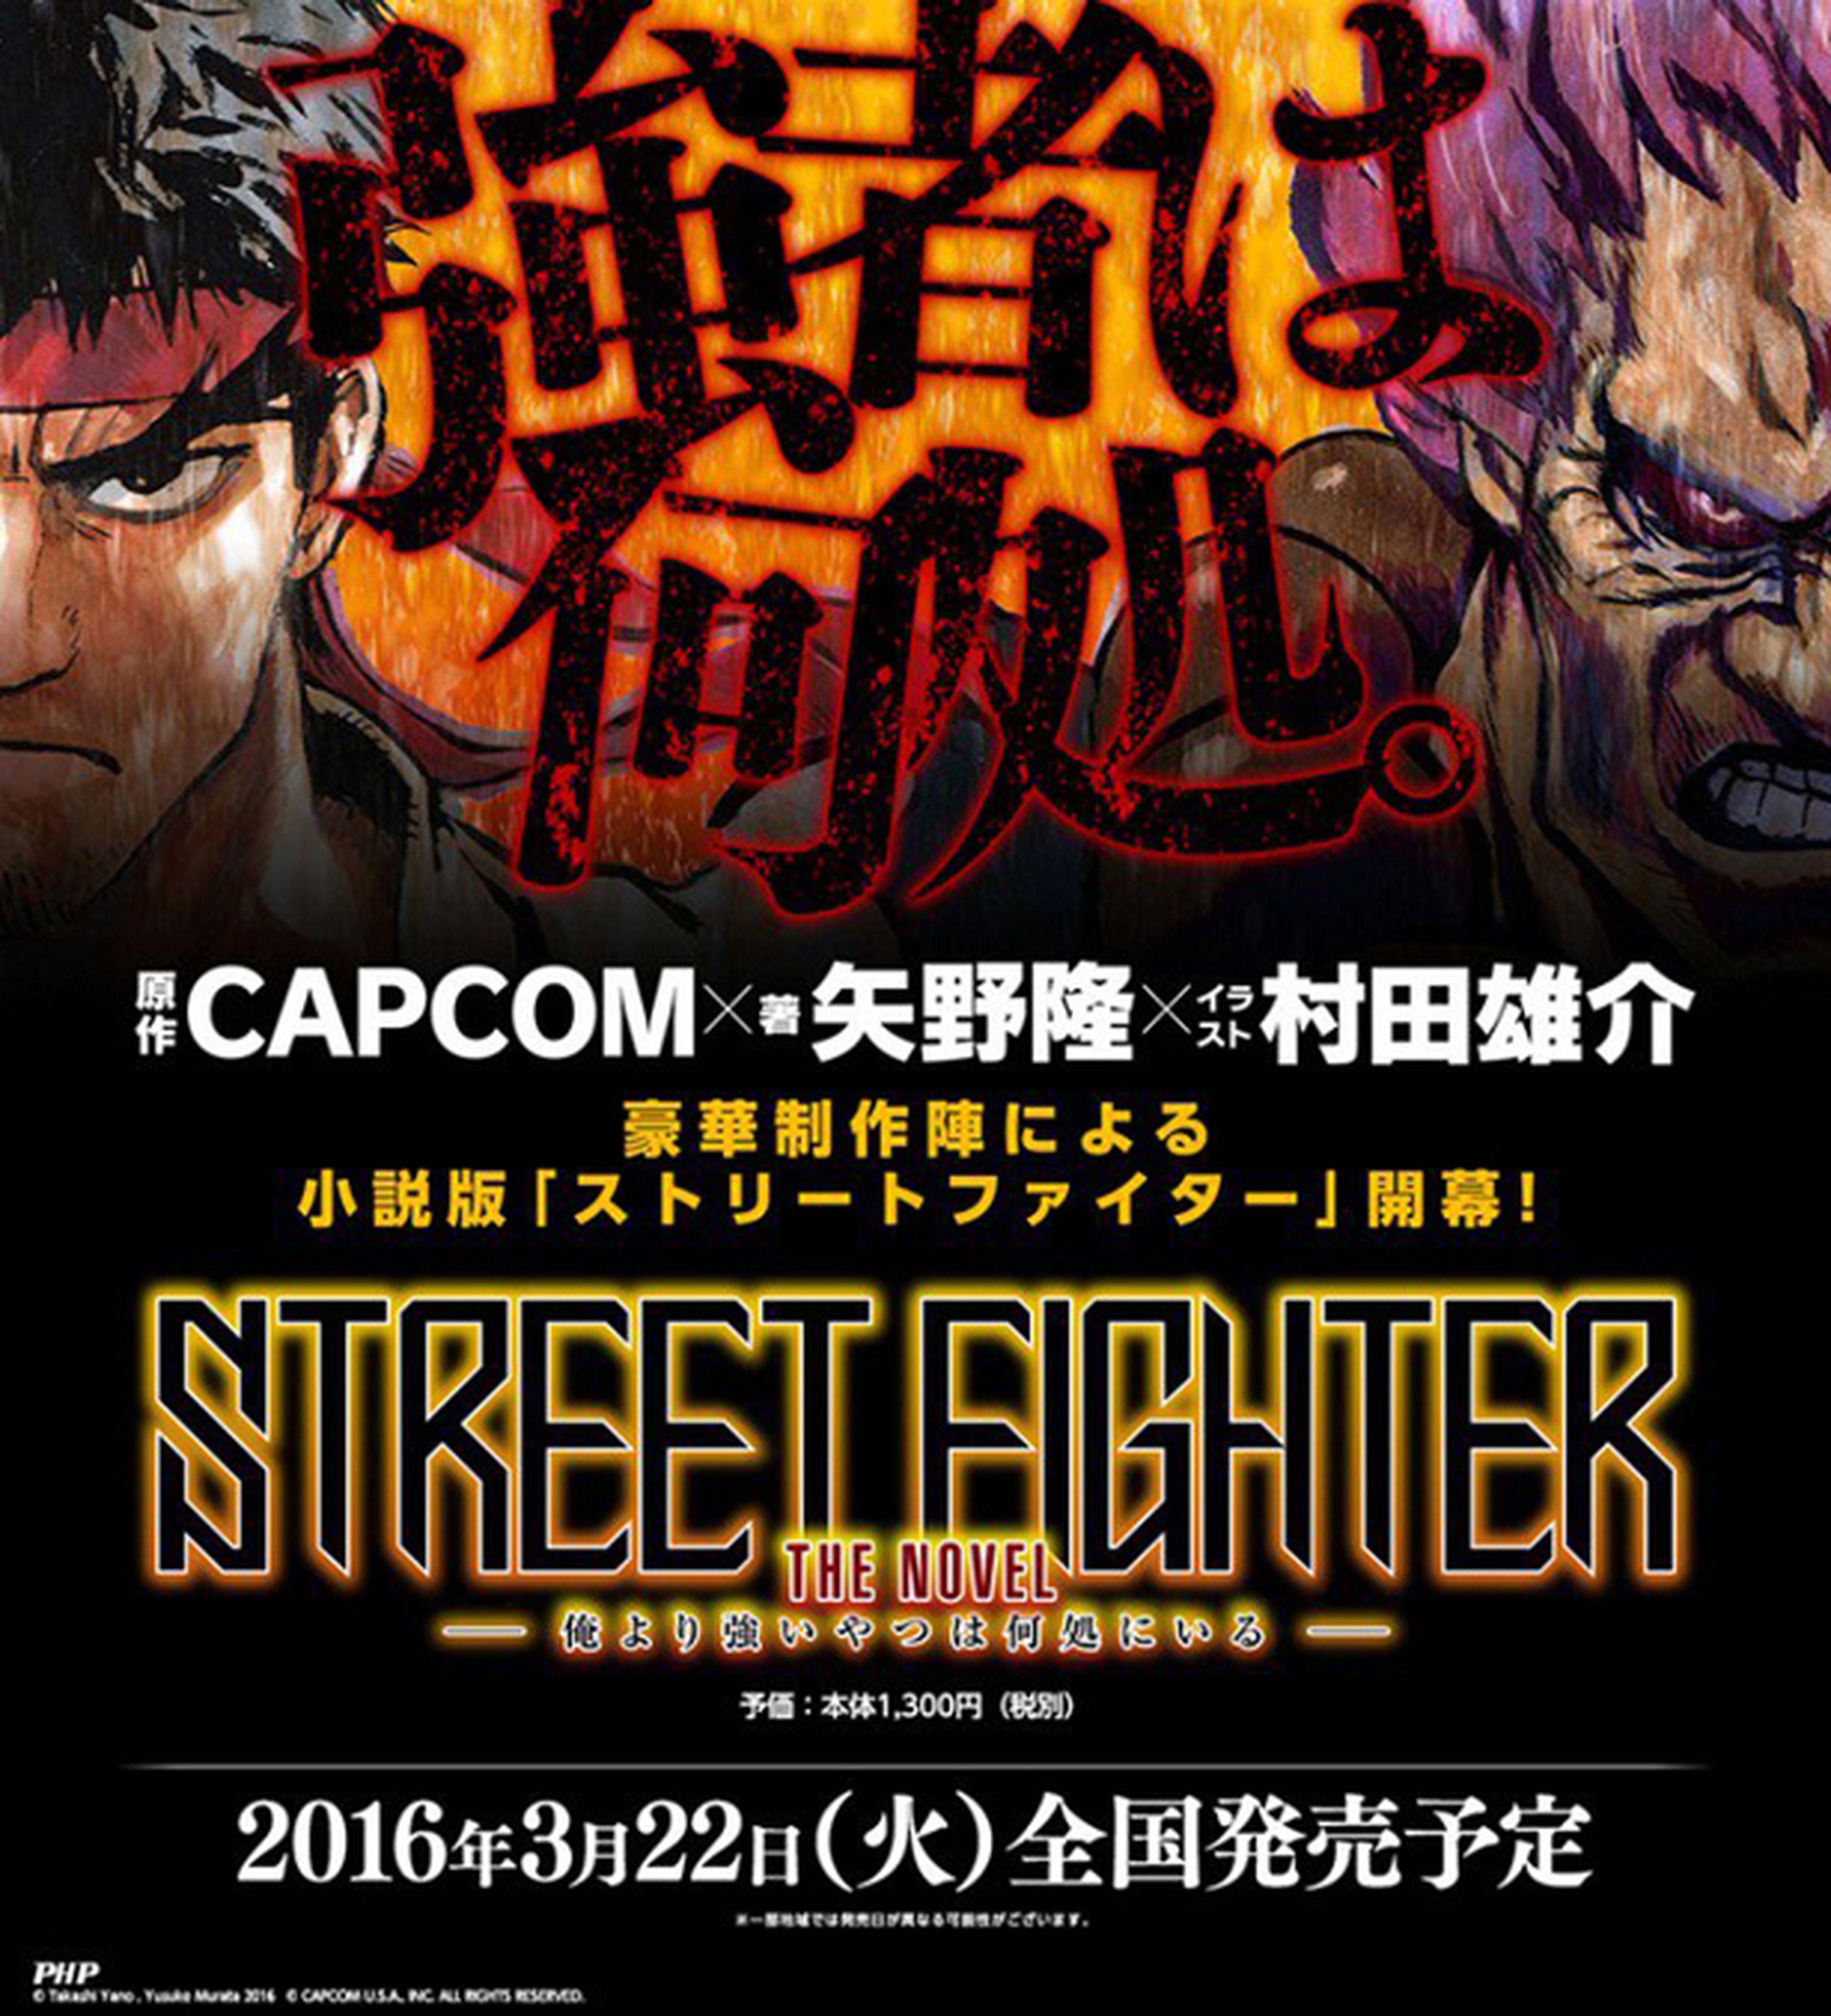 Street Fighter - Yūsuke Murata (One Punch-Man) ilustra una novela